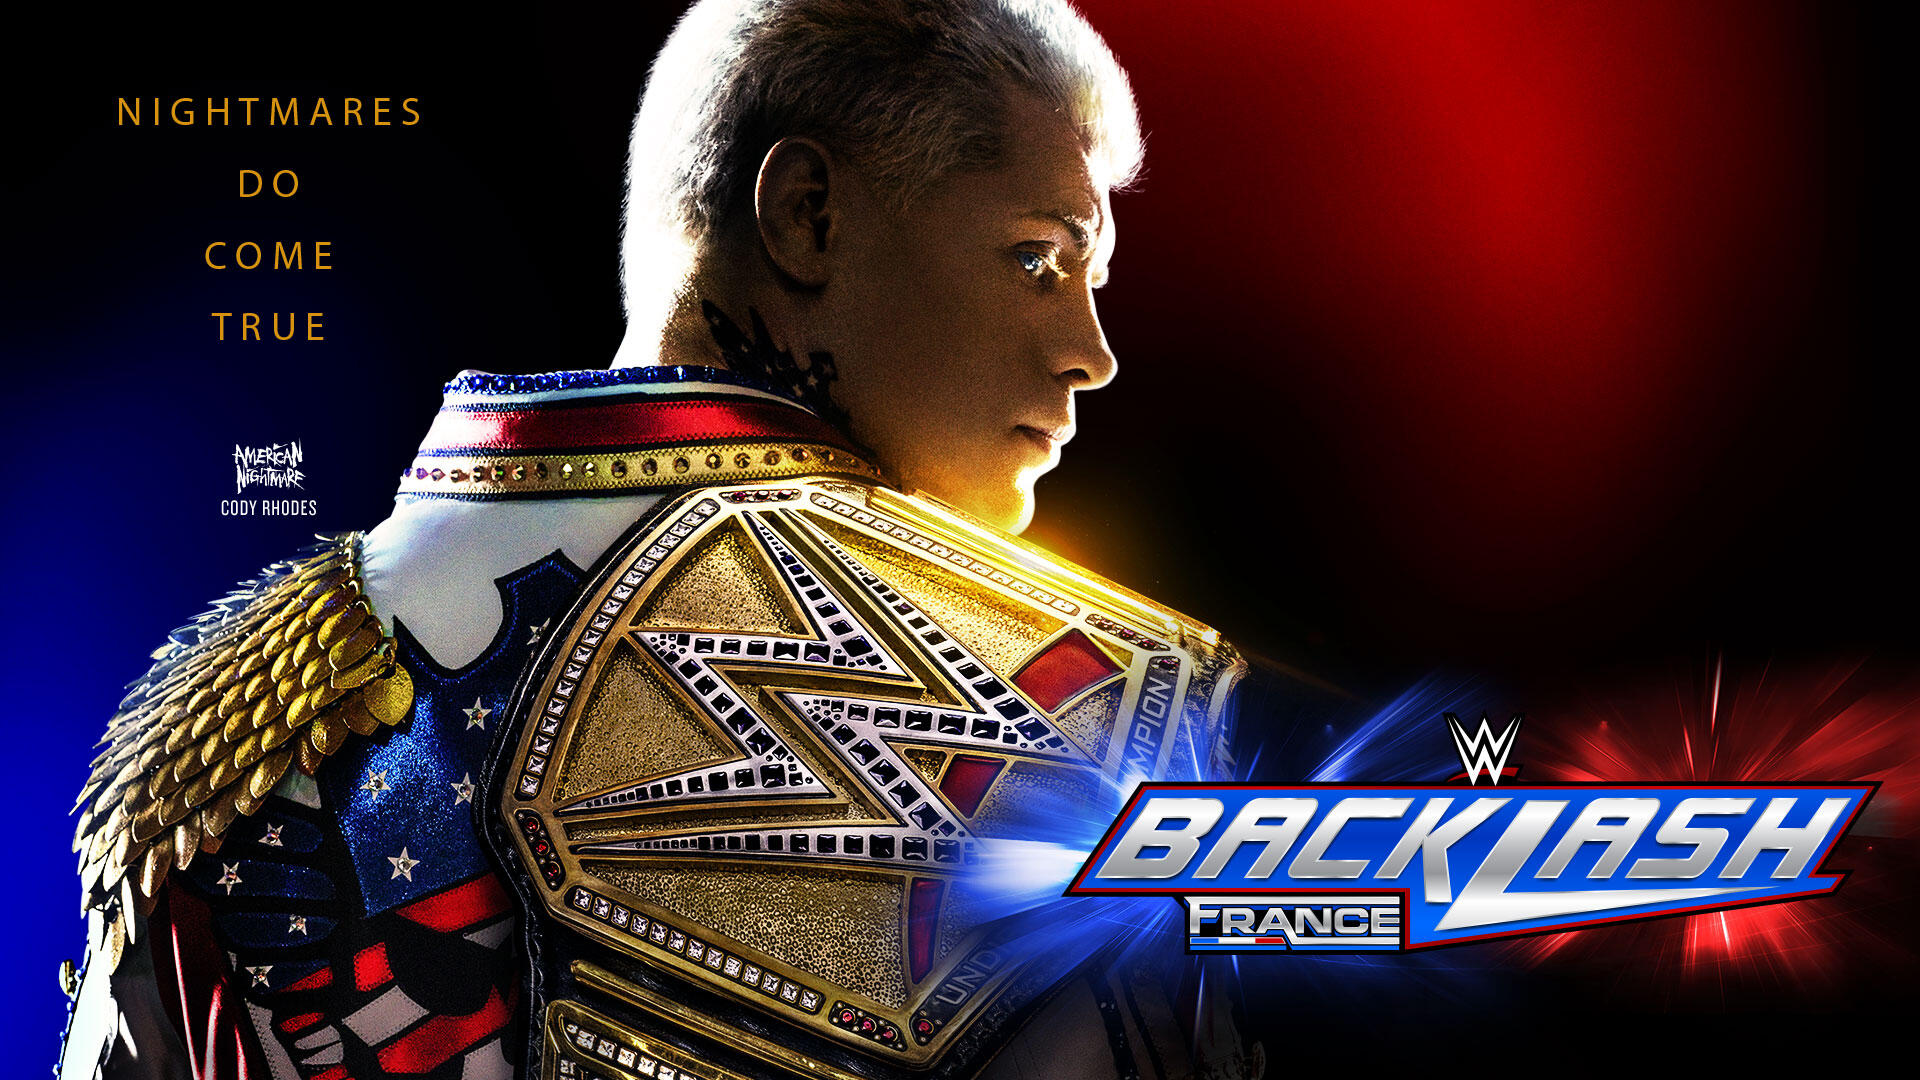 Carte finale de WWE Backlash France.